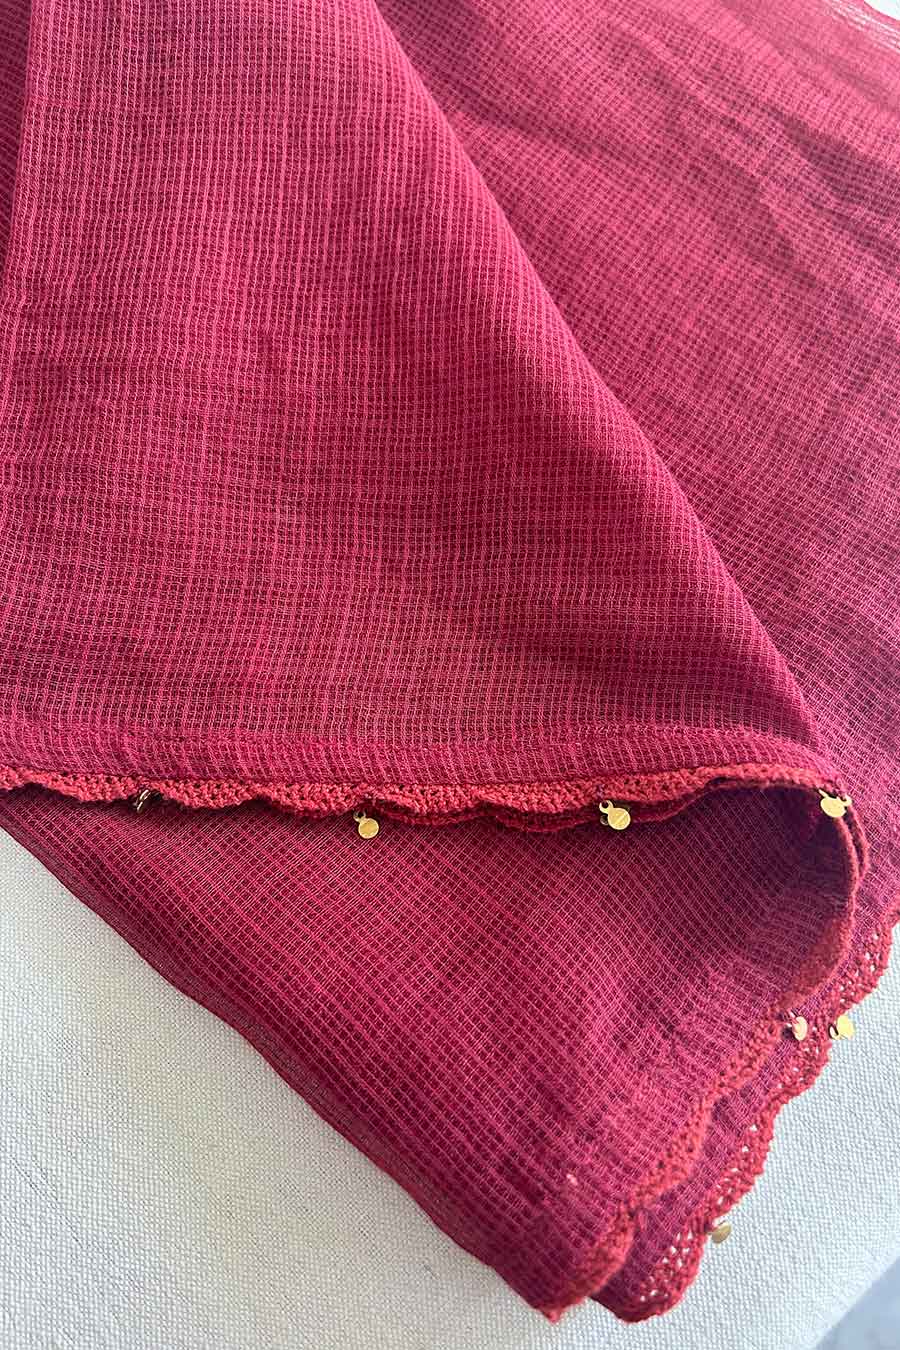 Maroon Crochet Lace & Metal Hangings Detailed Dupatta